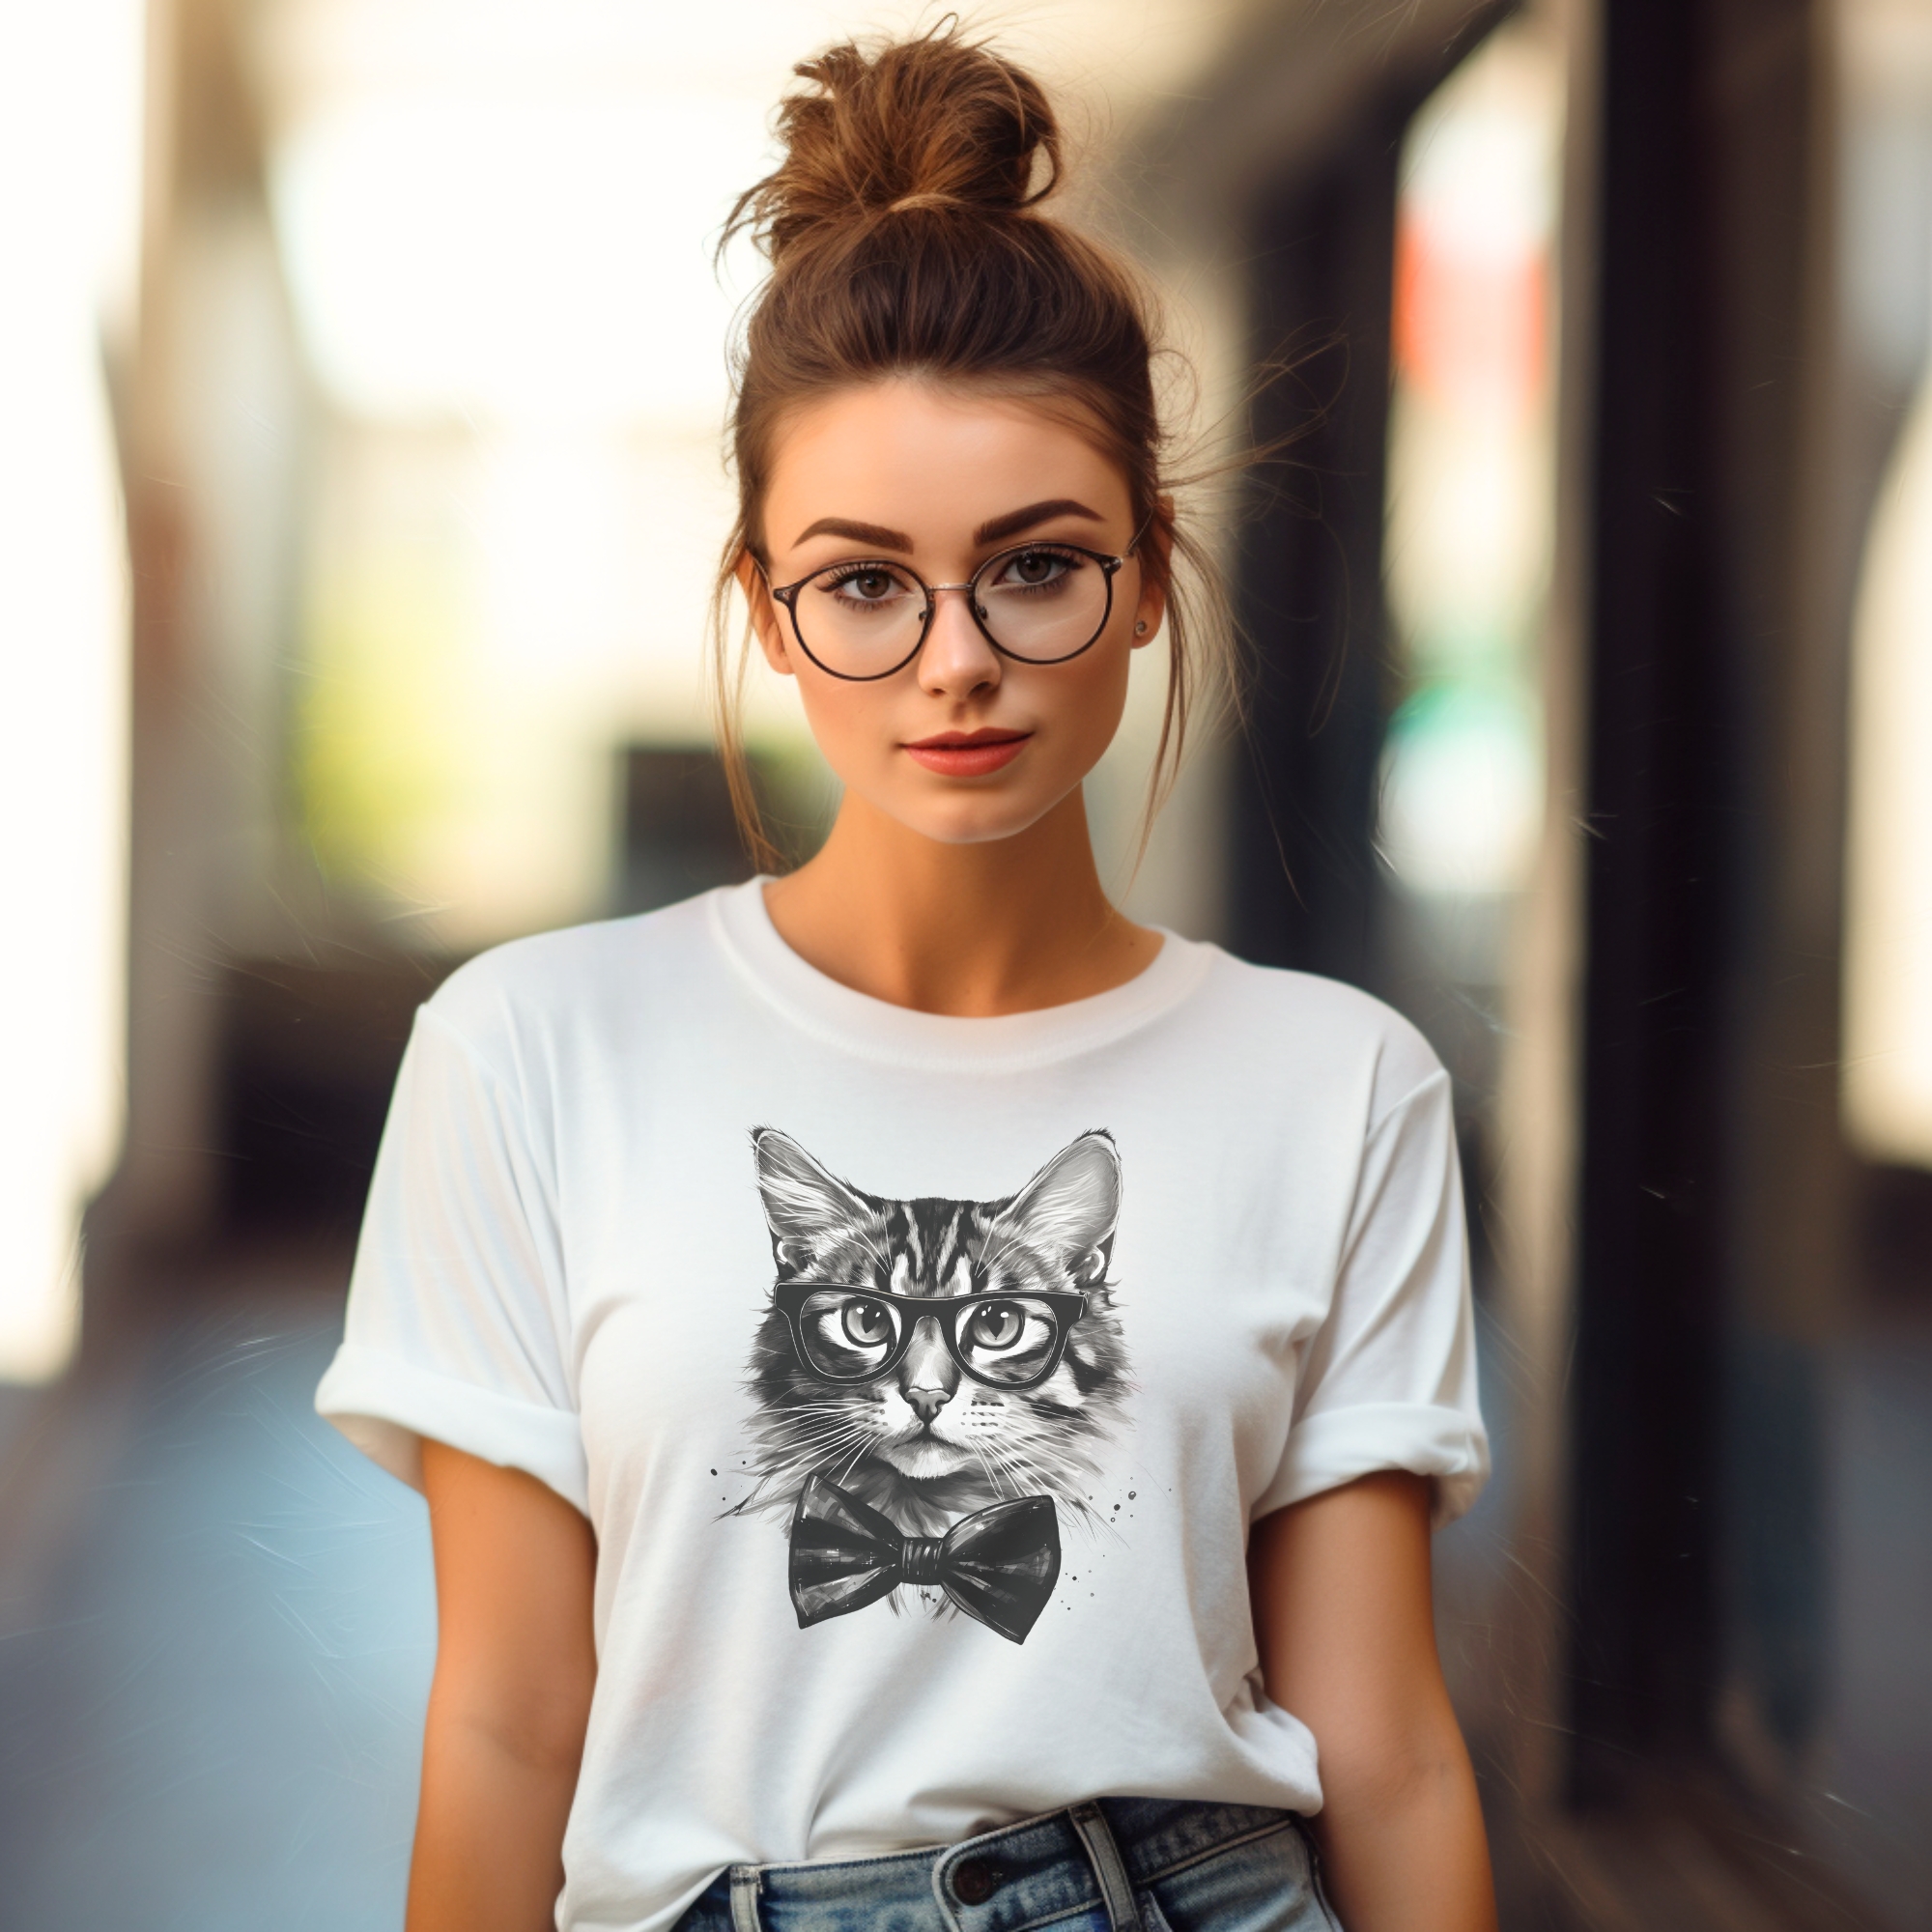 smarty cat t shirt